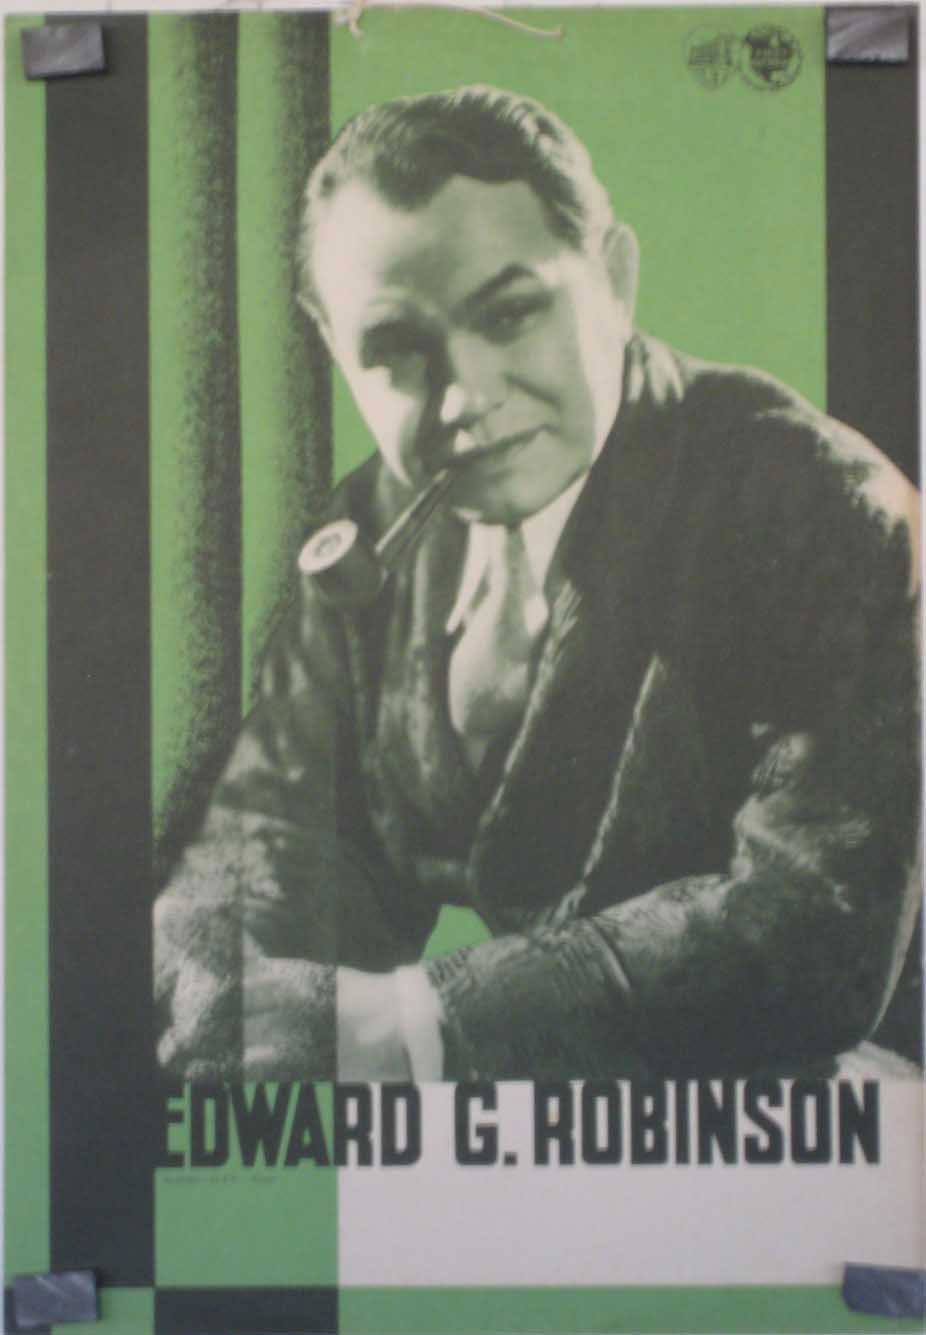 EDWARD G. ROBINSON